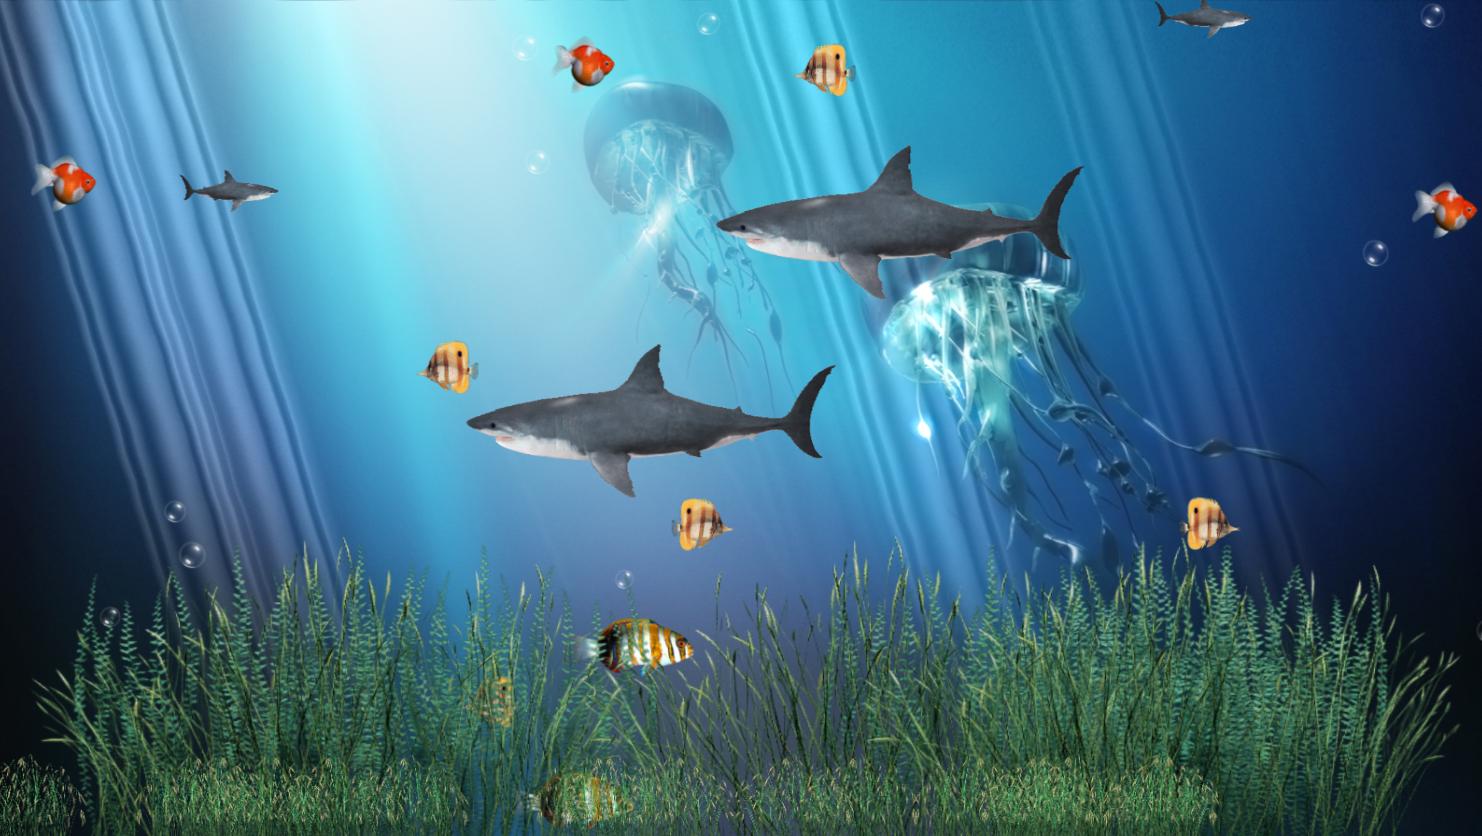 Aquarium Live Wallpaper Windows 10 - WallpaperSafari